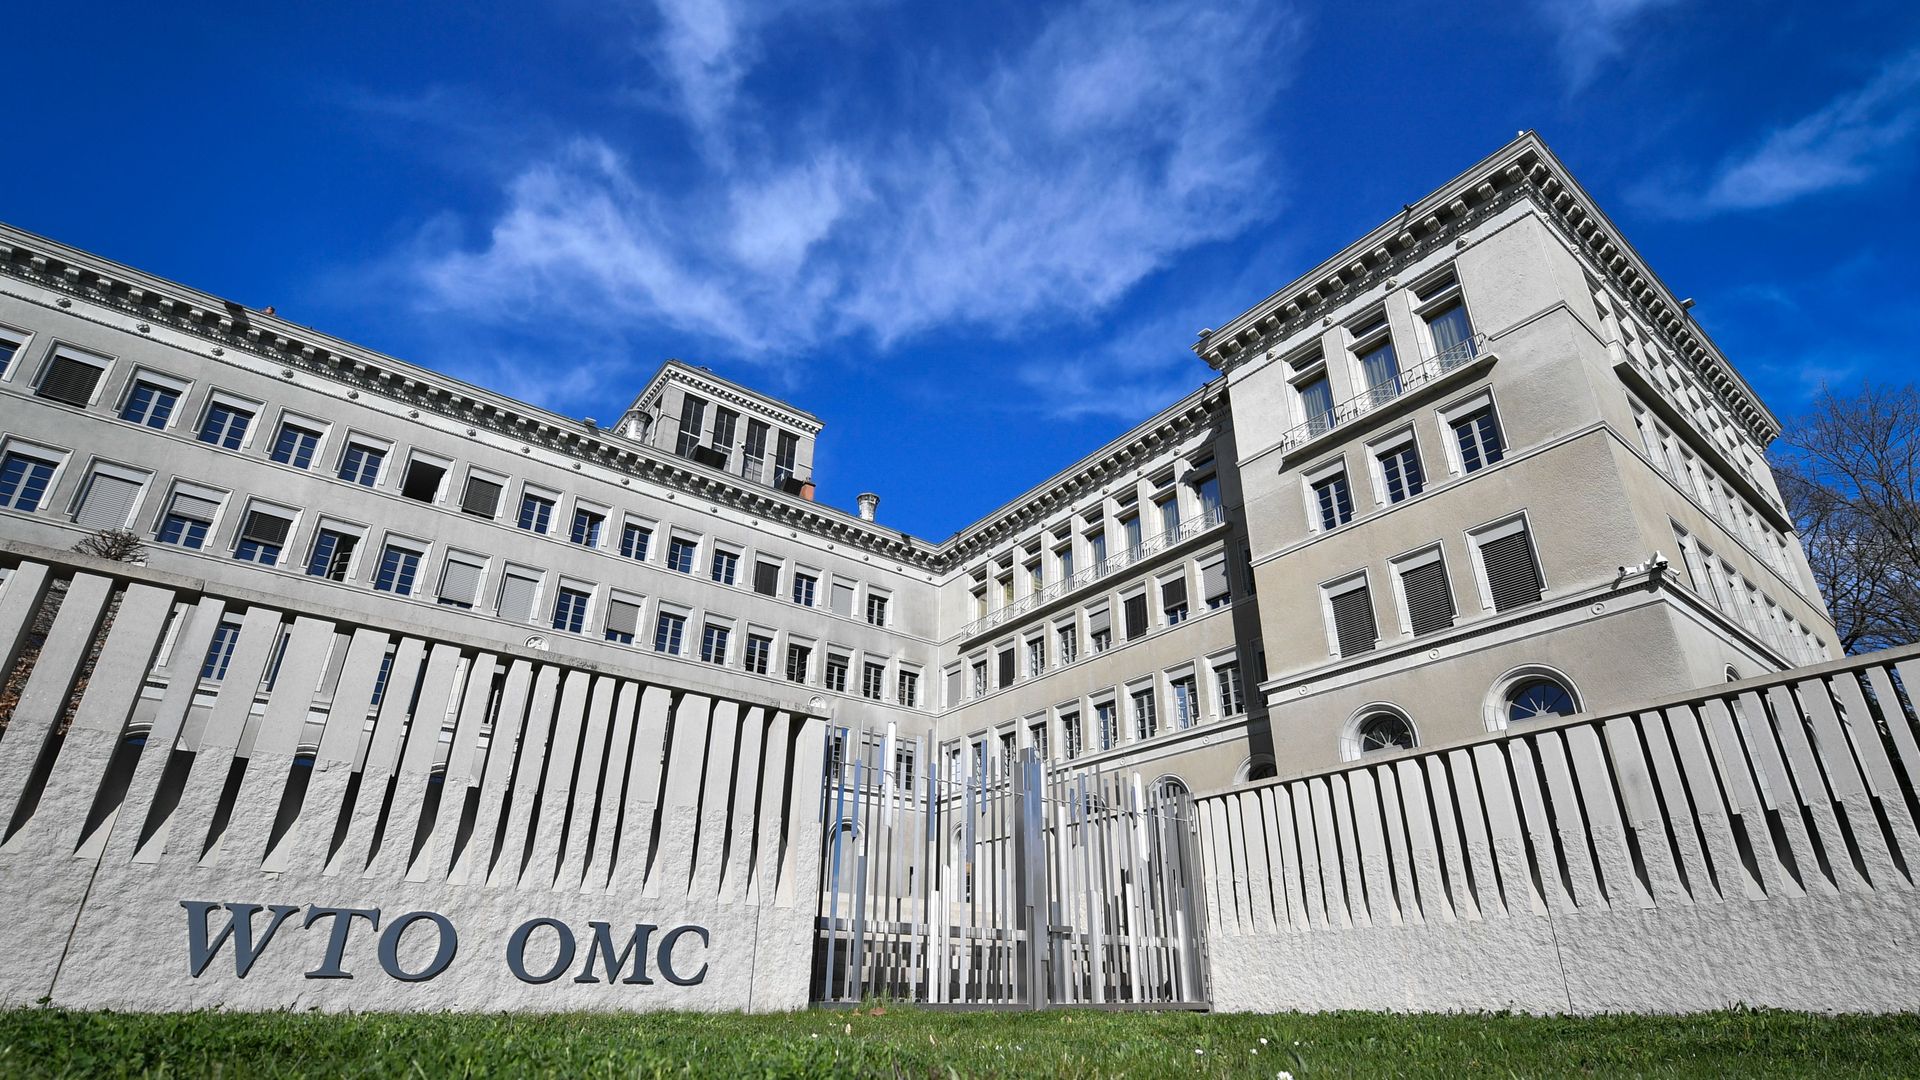 The World Trade Organization headquarters are seen in Geneva on April 12, 2018.